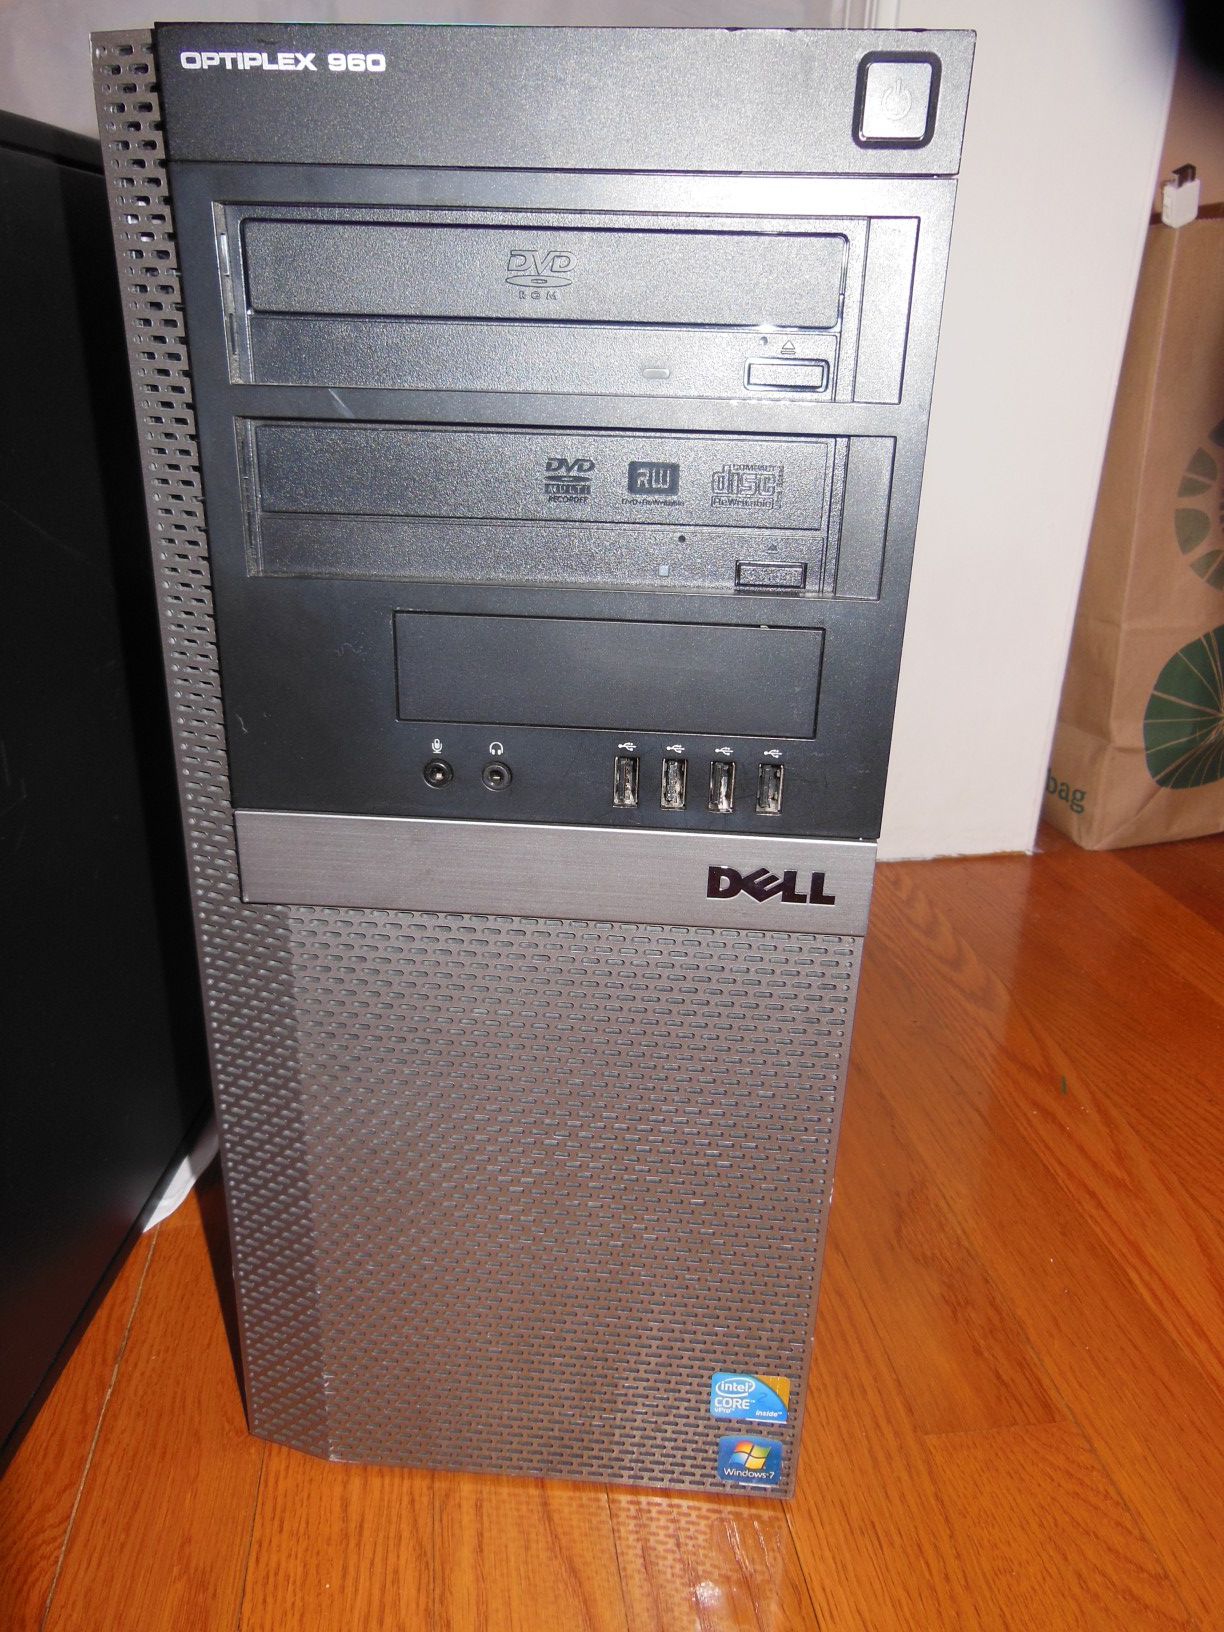 Dell Optiplex 960 CPU, Quad core, 1 terrabyte hard drive, 2.83GHz, , 4gb RAM, + extras